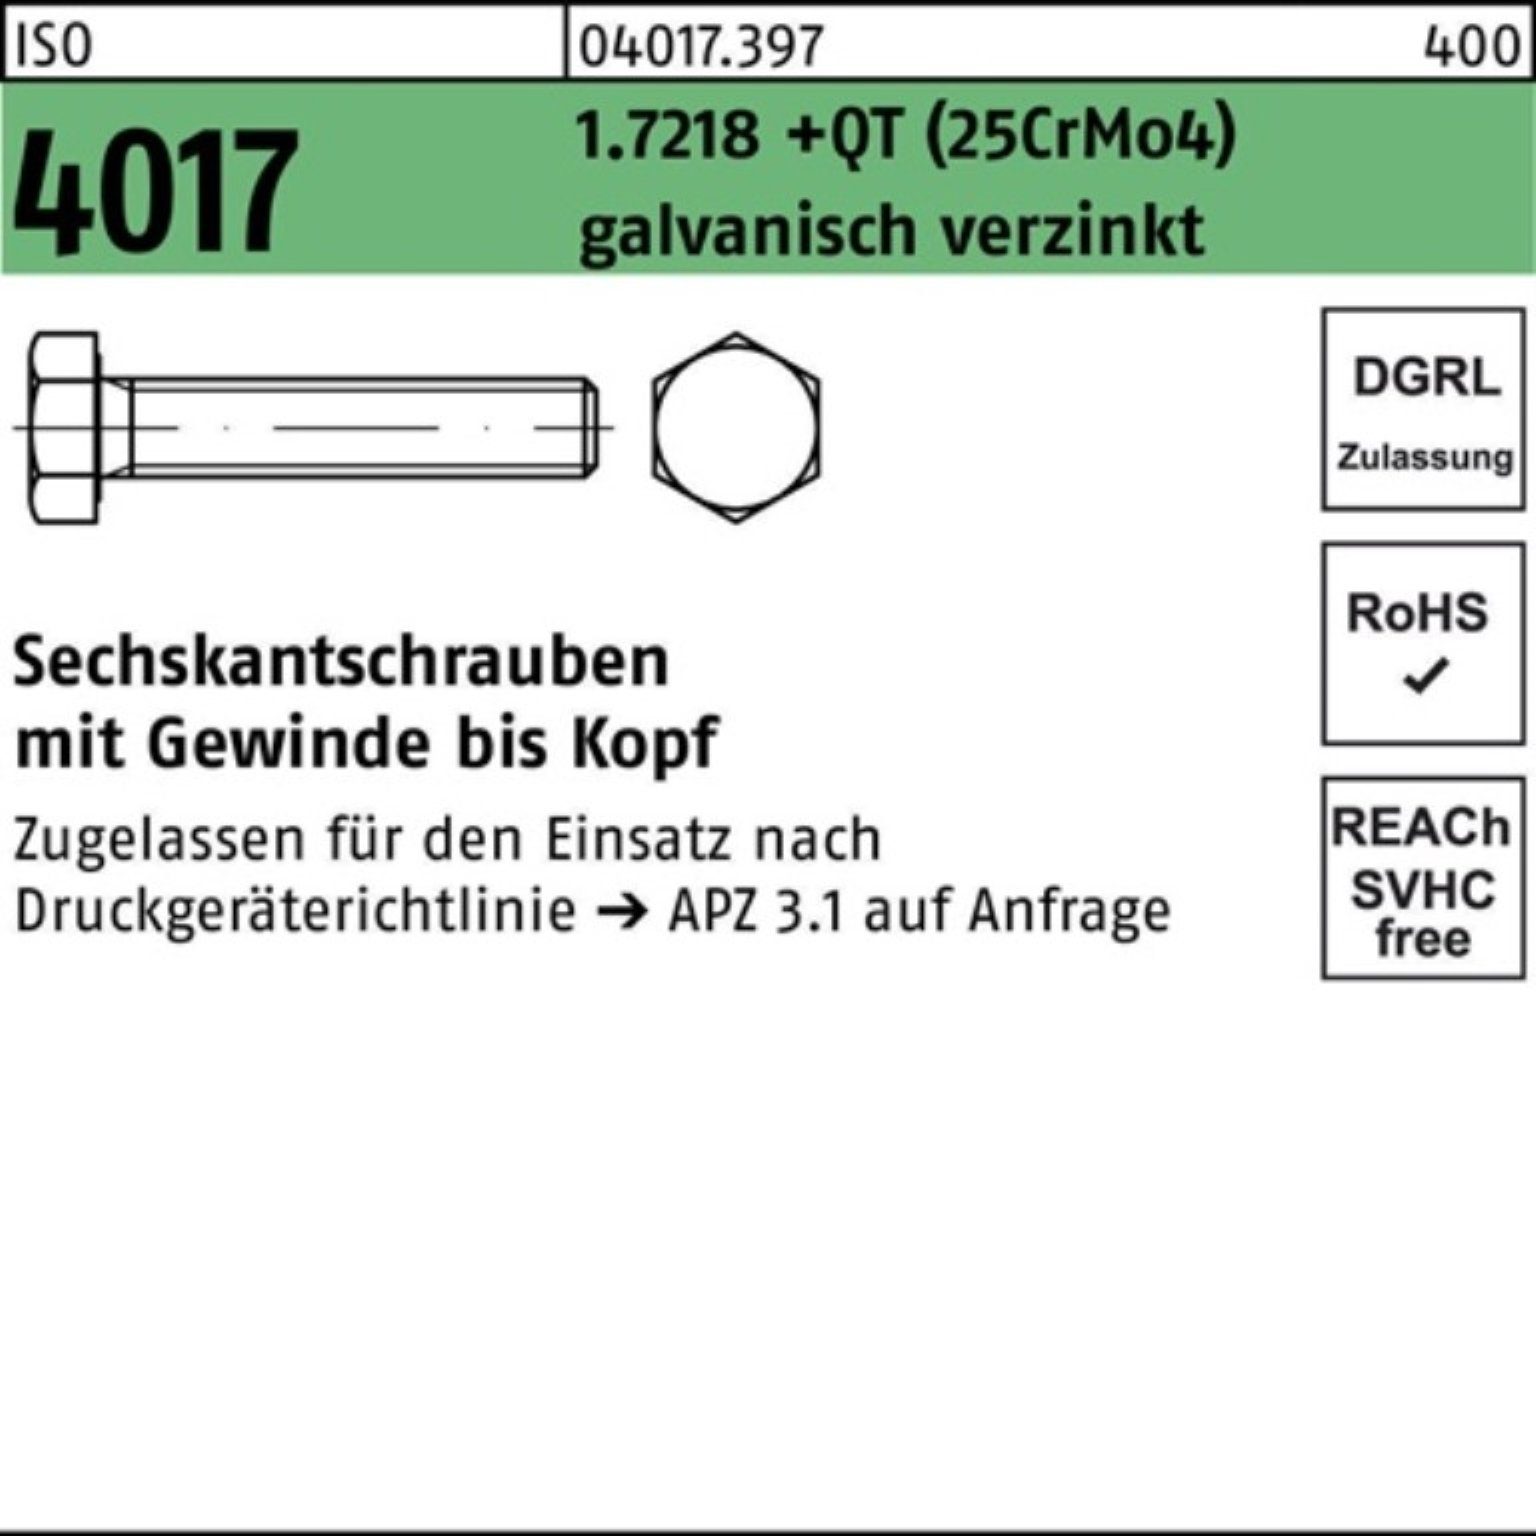 Sechskantschraube Sechskantschraube 4017 Pack M16x120 1.7218 VG 100er (25CrMo4) Bufab +QT ISO